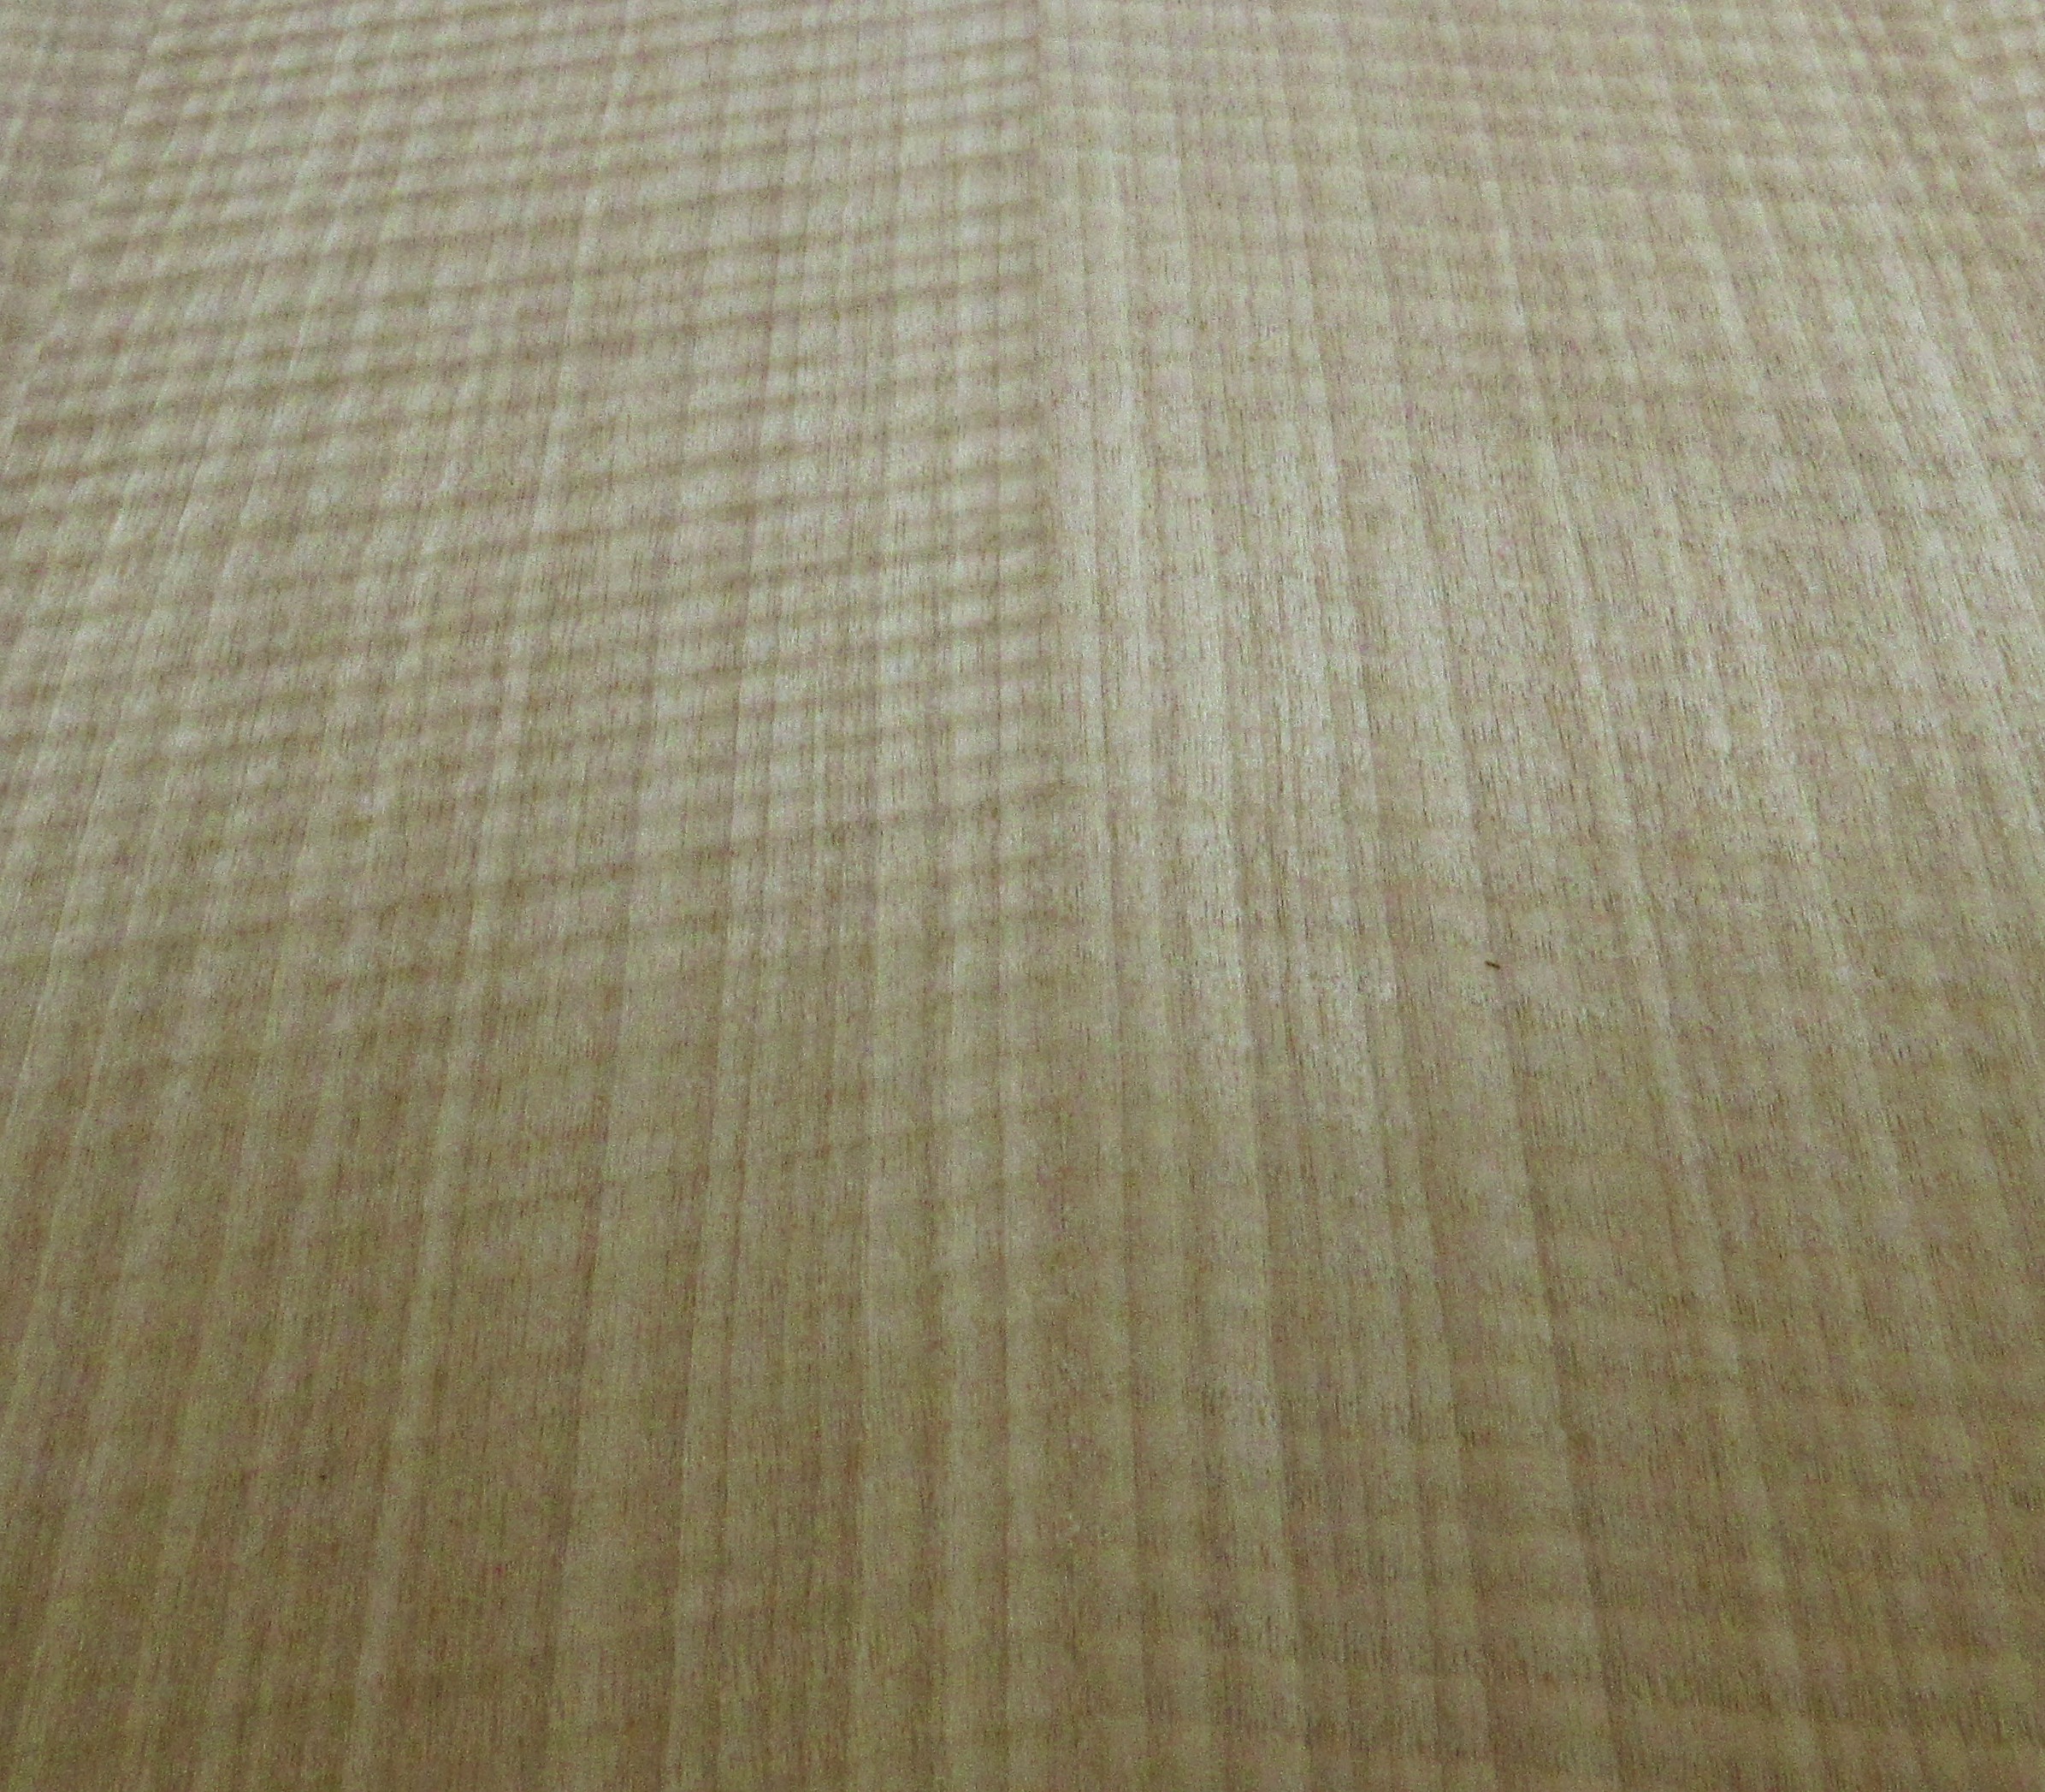 Closeup of the hardwood veneer: Anigre veneer grain